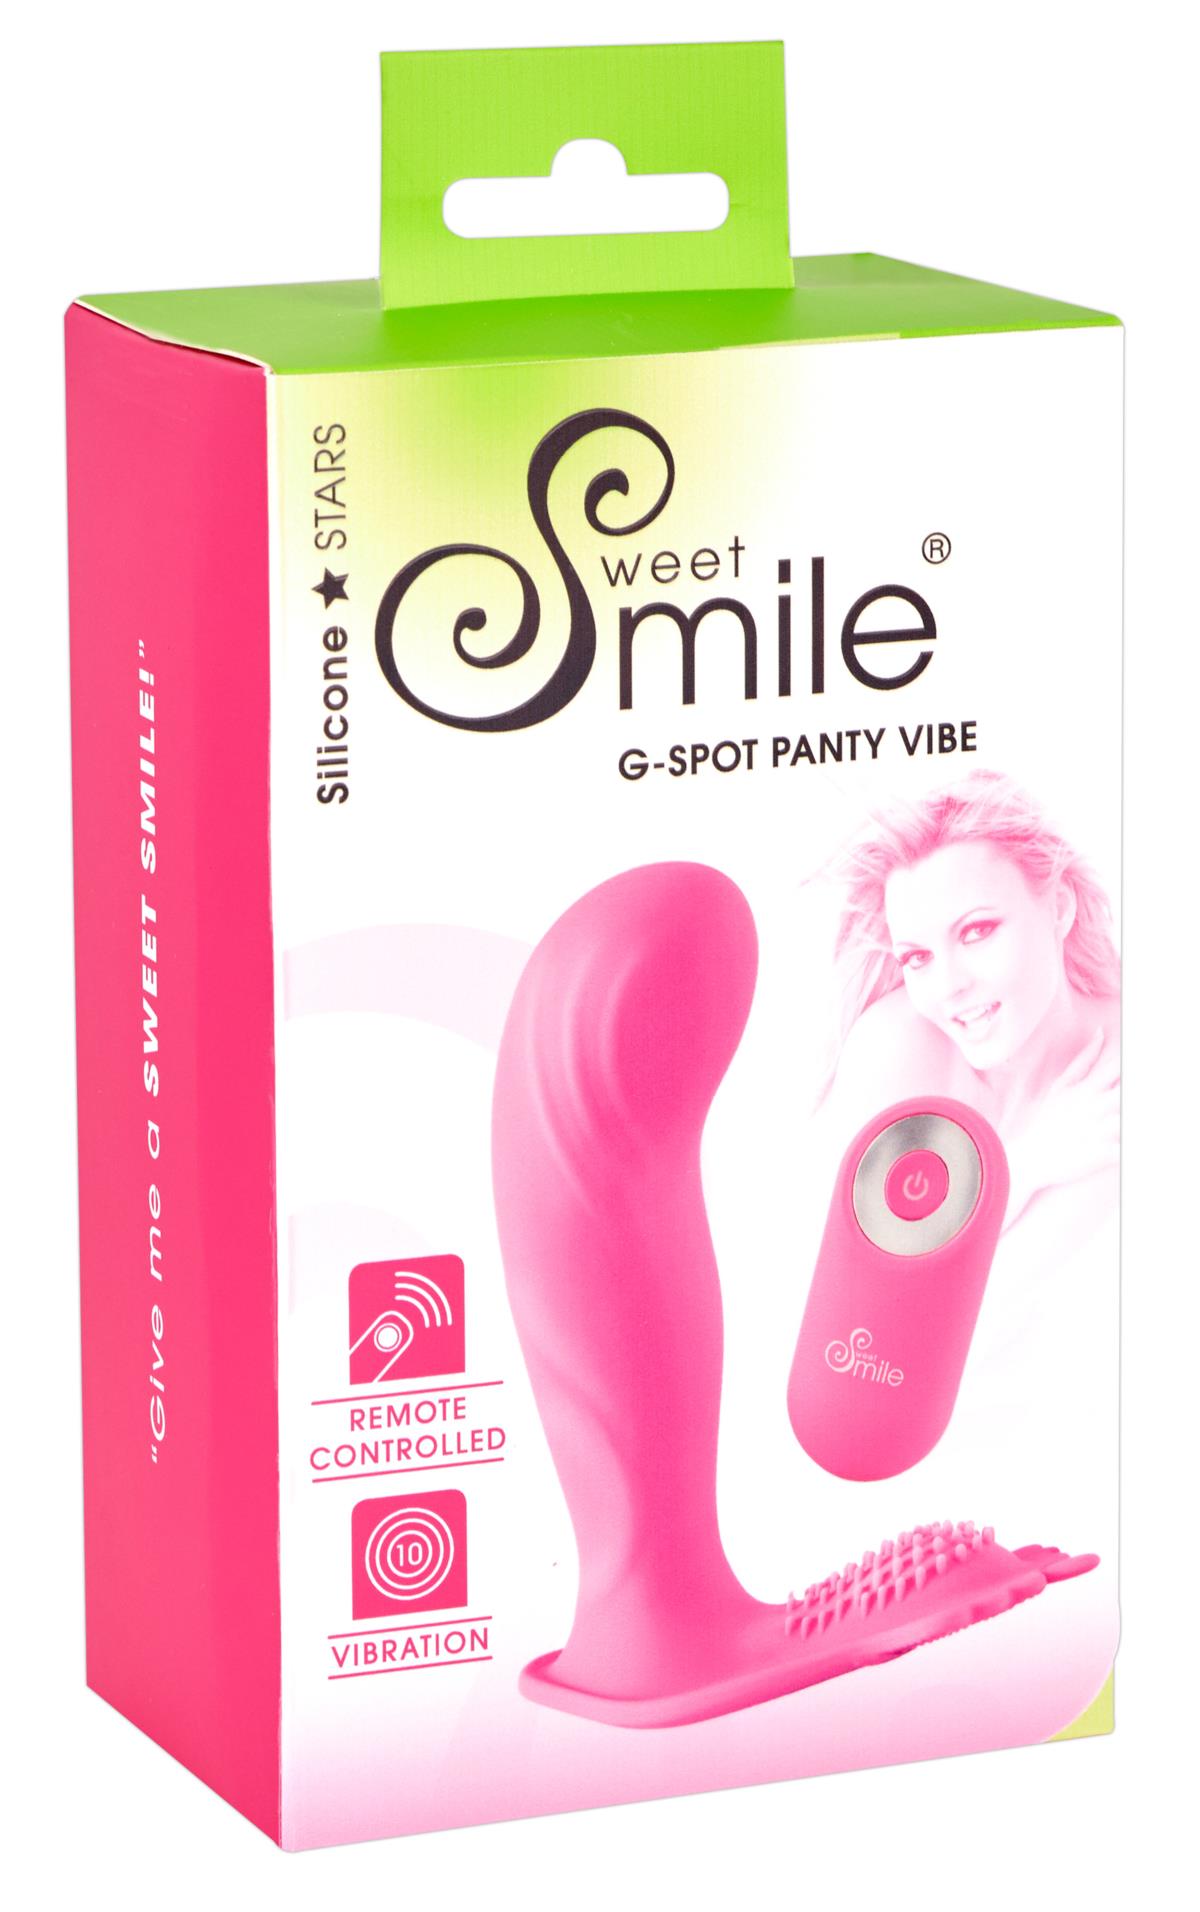 Sweet Smile G-spot Panty Vibe